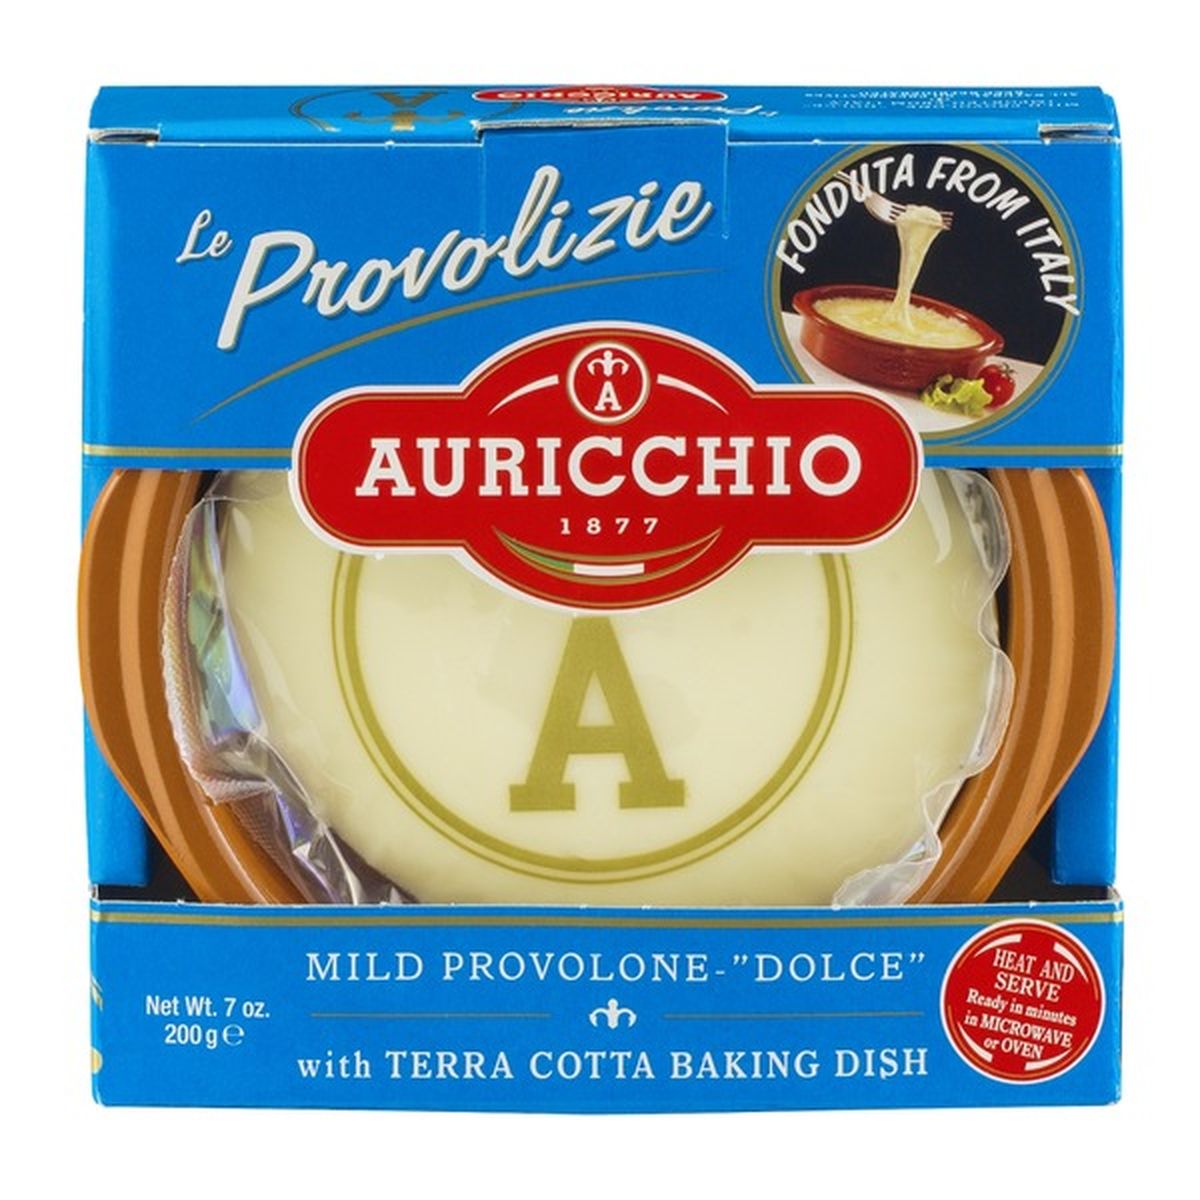 Calories in Auricchio Provolone Fonduta